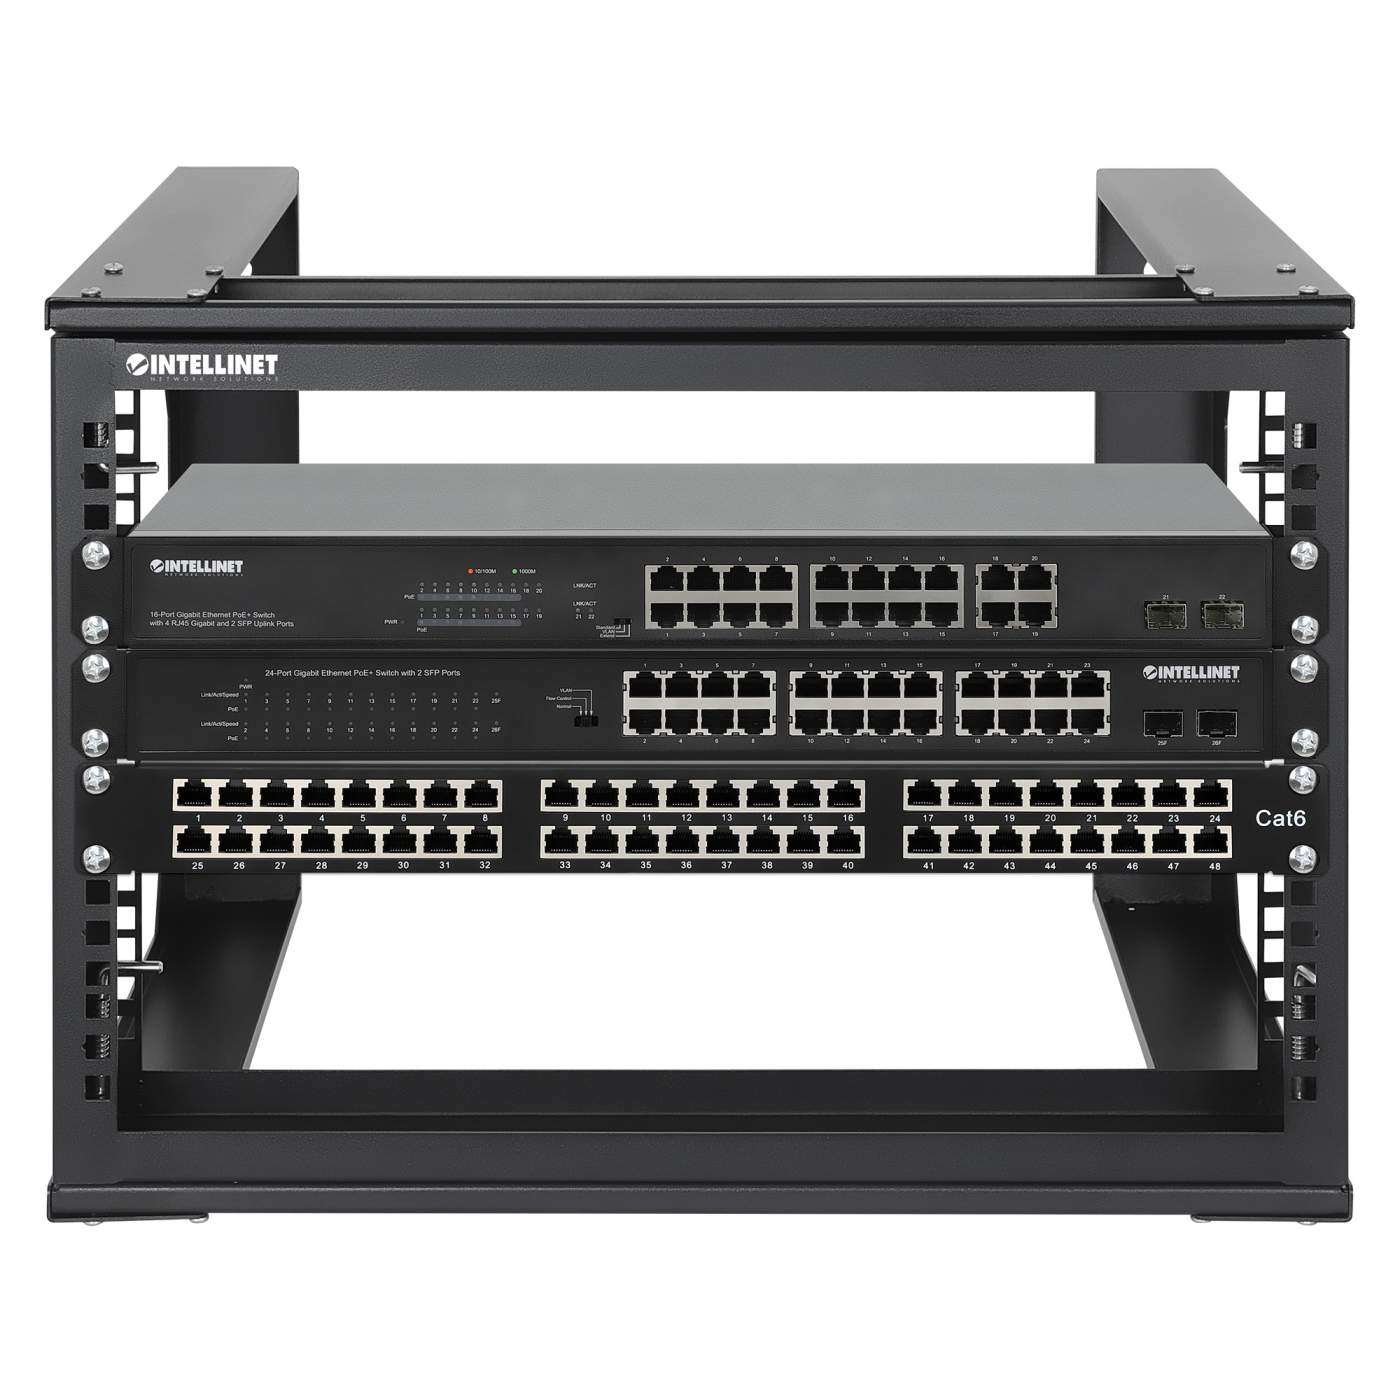 ETHERNET NETWORK RJ45 2-Port Switch Sharing Box - REVERSIBLE